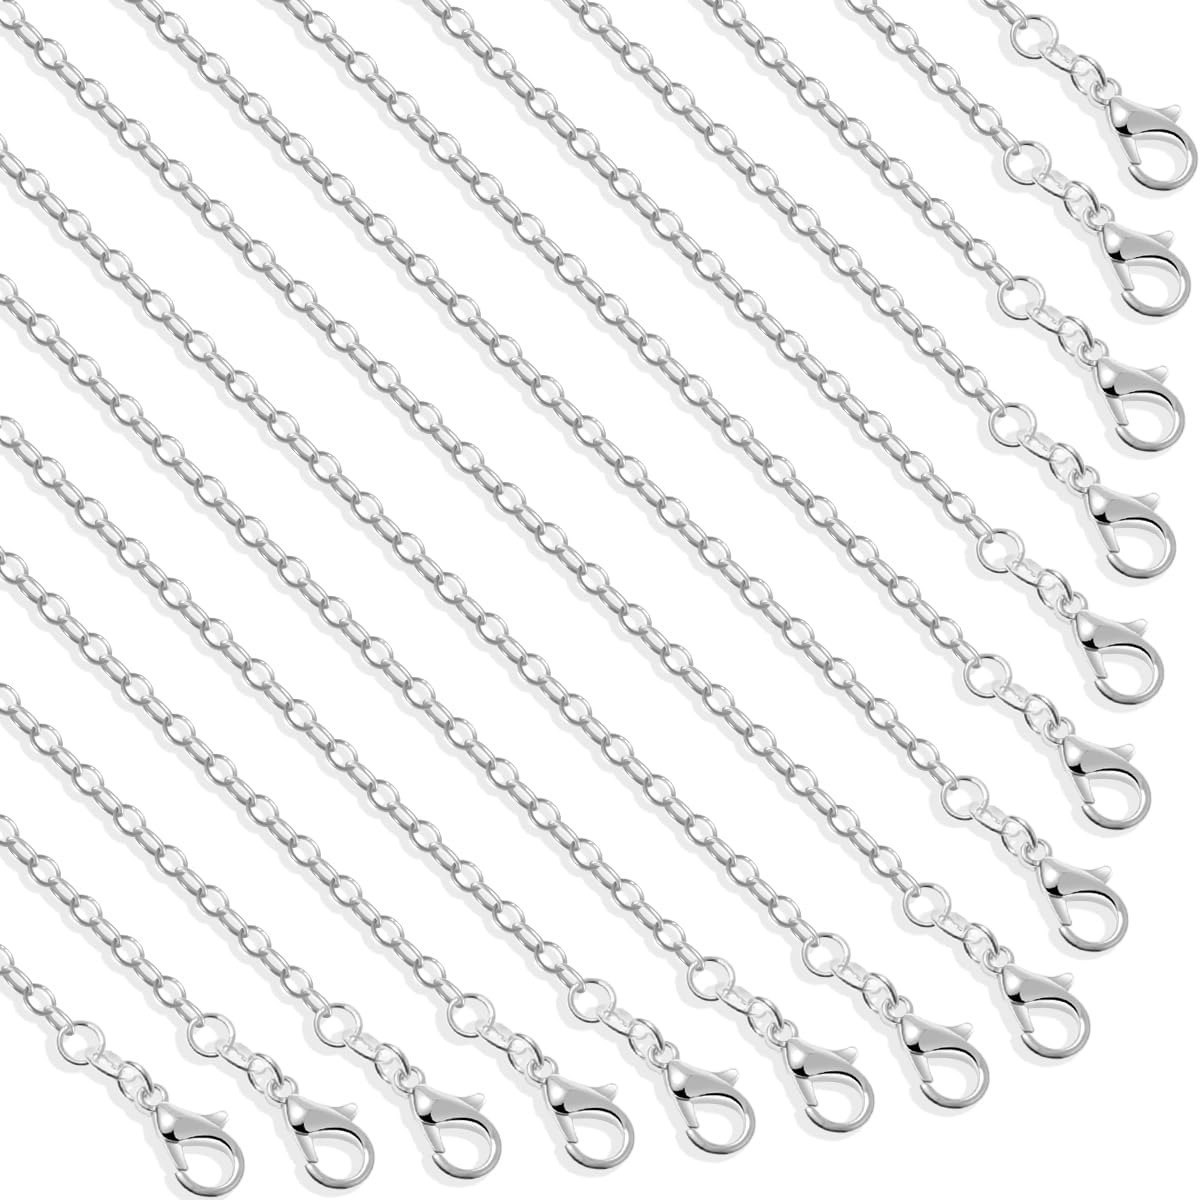 PackS زنجیرهای گردنبند با روکش نقره جادوهای زنجیره ای کابل فله برای ساخت جواهرات 1.2 میلی متر (18 اینچ)